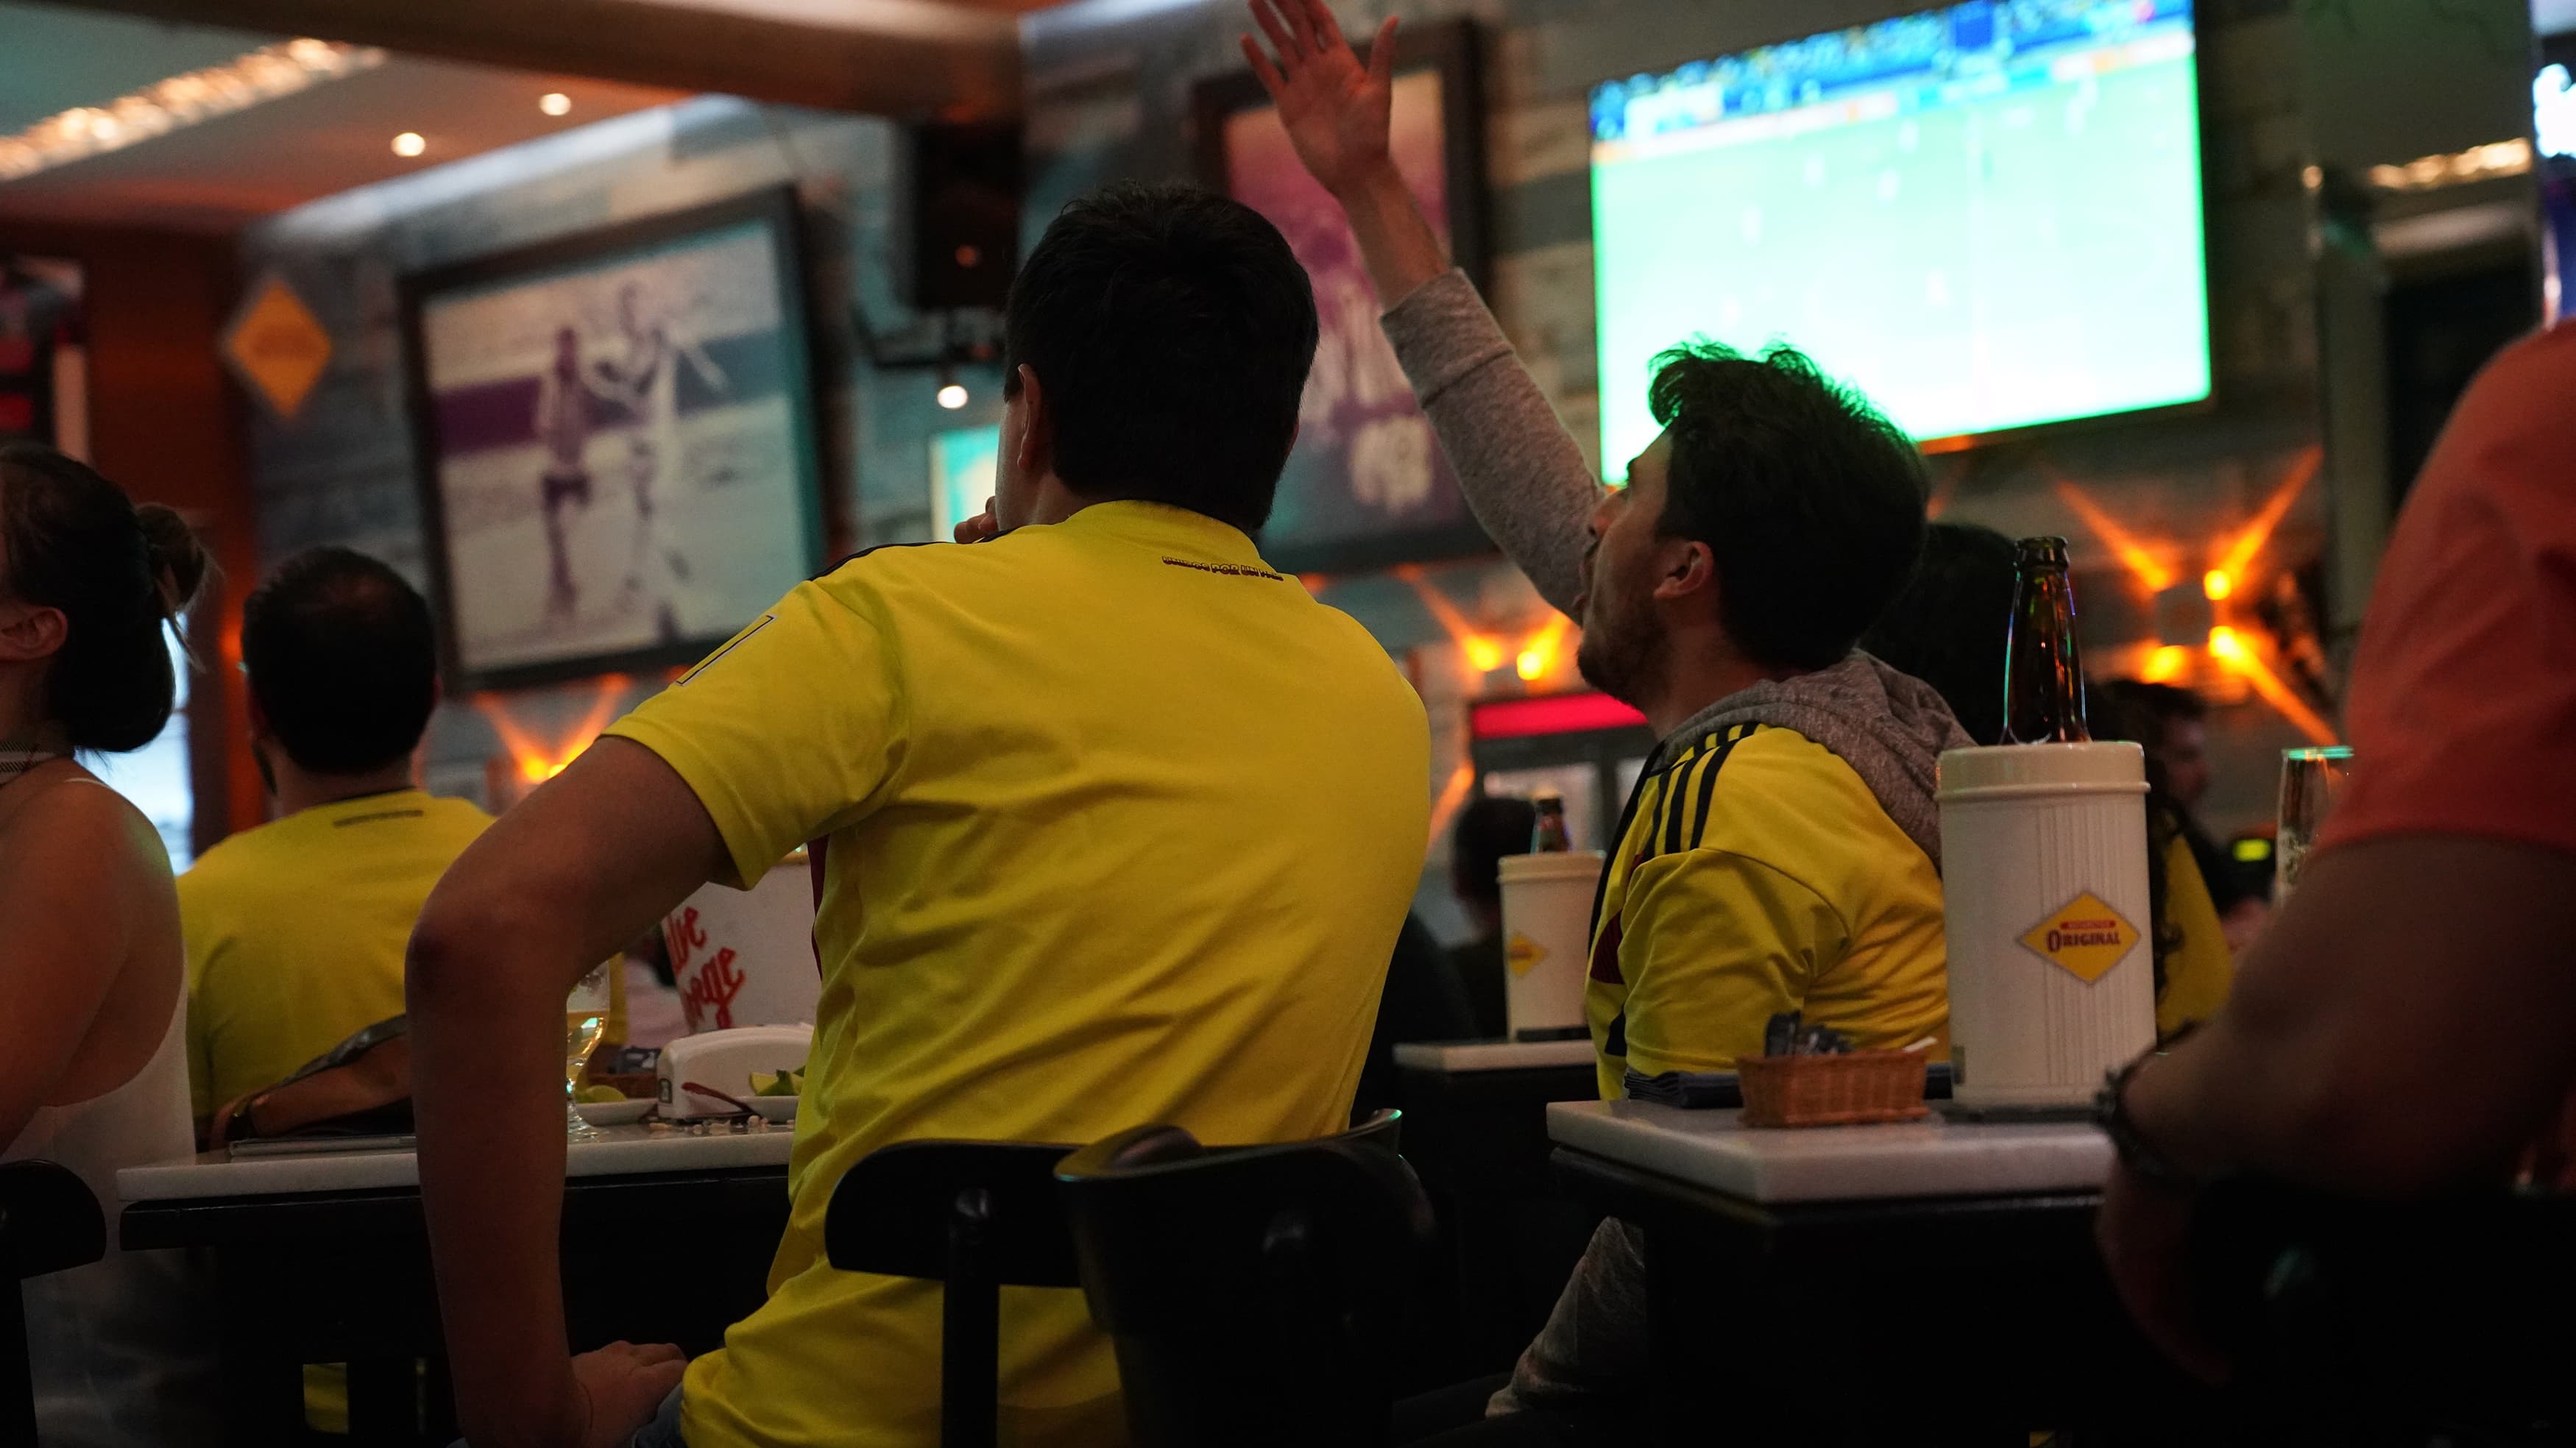 Football fans watching Copa America 2019